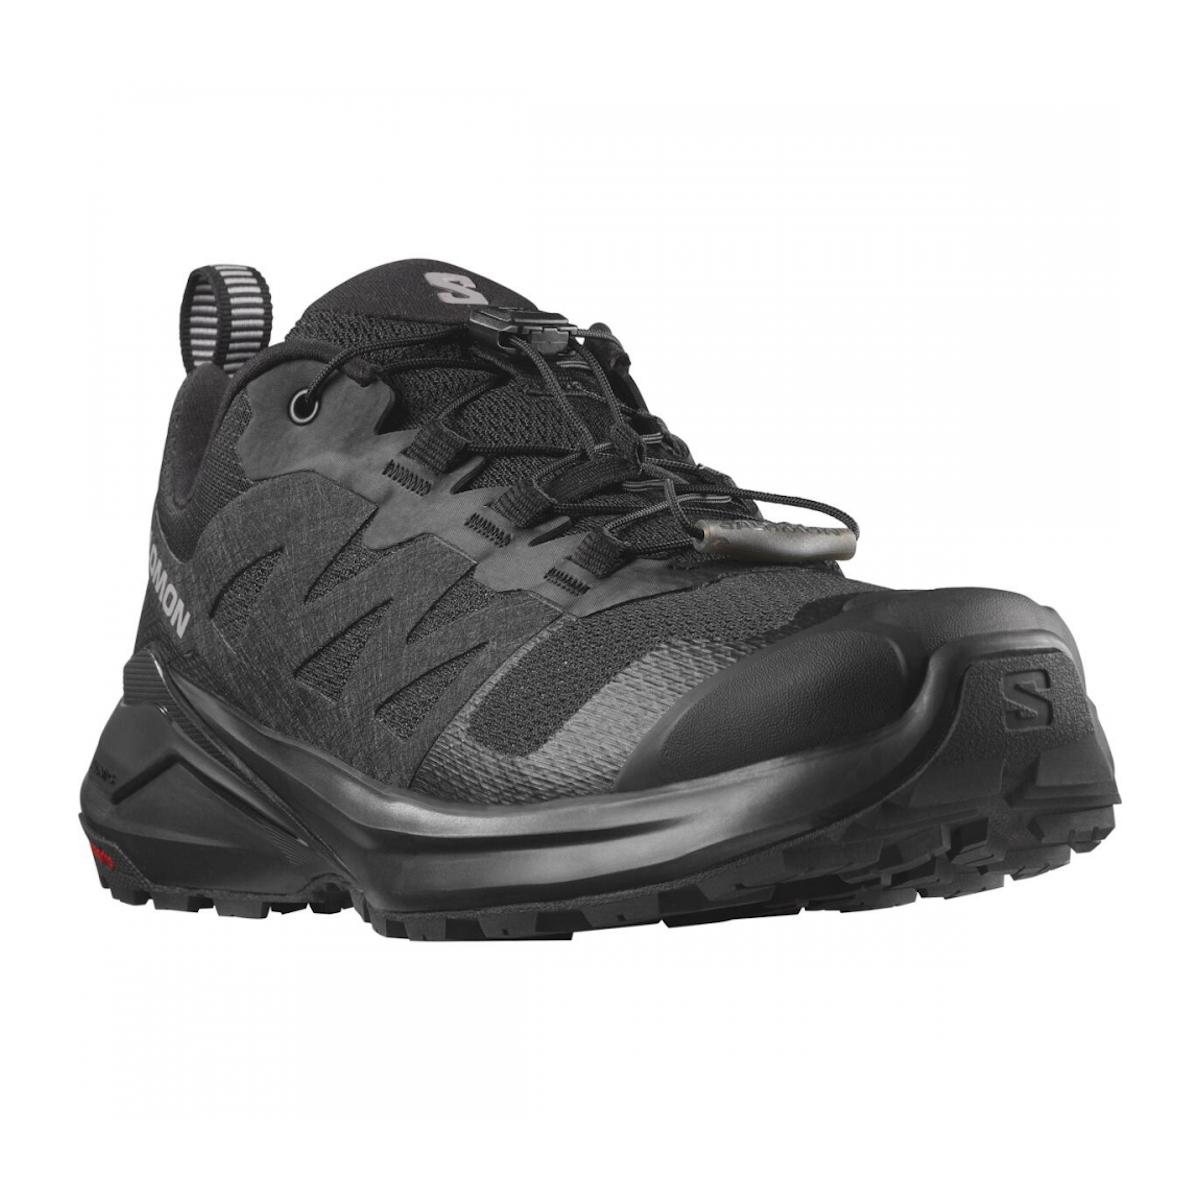 SALOMON X ADVENTURE W trail running shoes - black